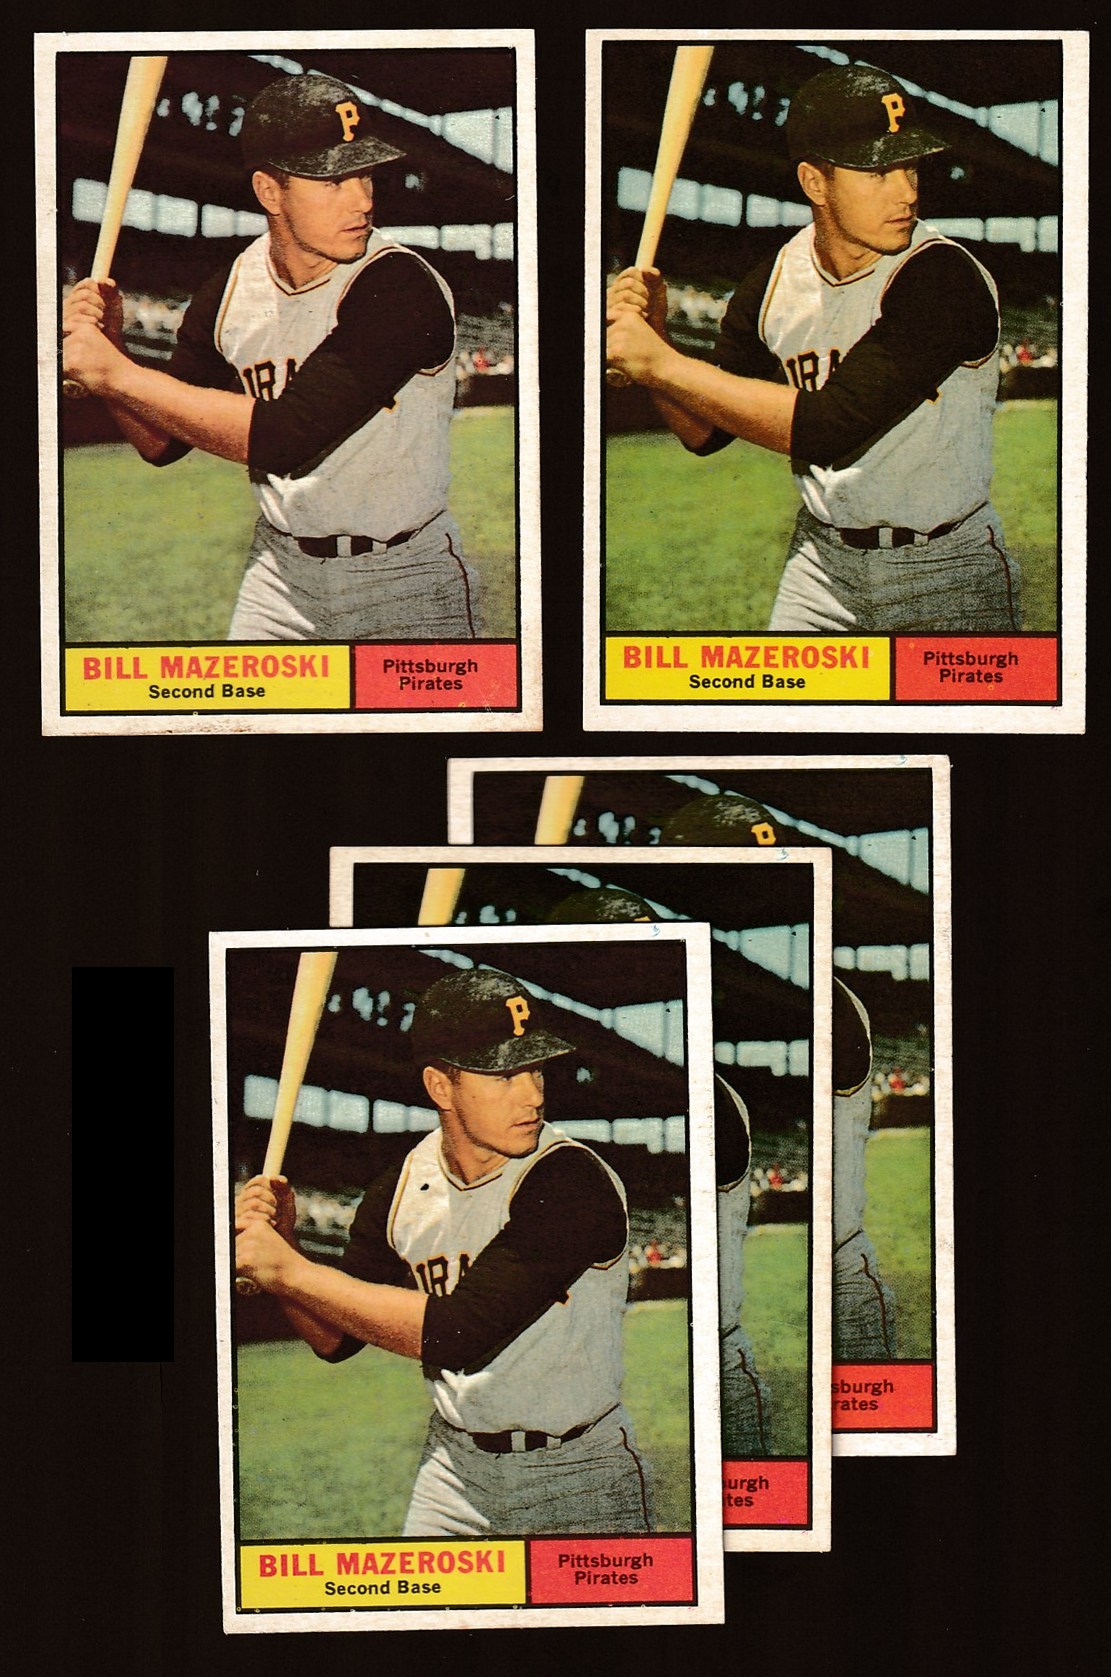 1961 Topps #430 Bill Mazeroski [#] SHORT PRINT [VAR:no blue mark] (Pirates) Baseball cards value